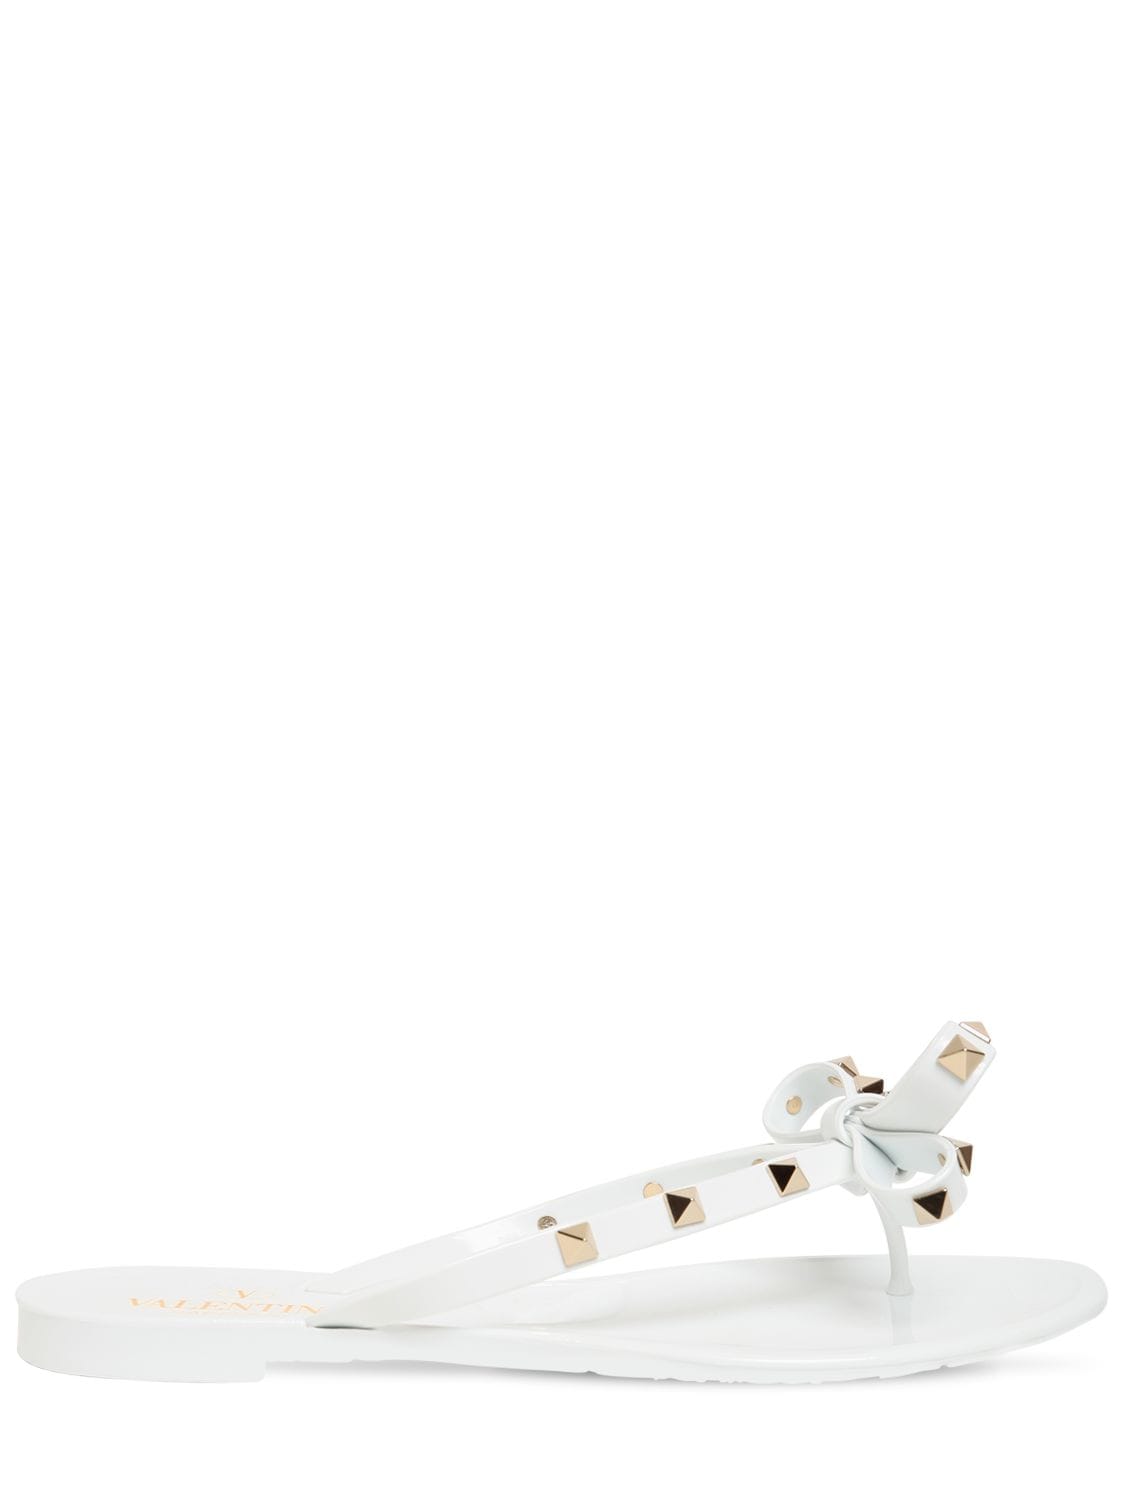 Valentino Garavani Rockstud Embellished Flip Flops In White